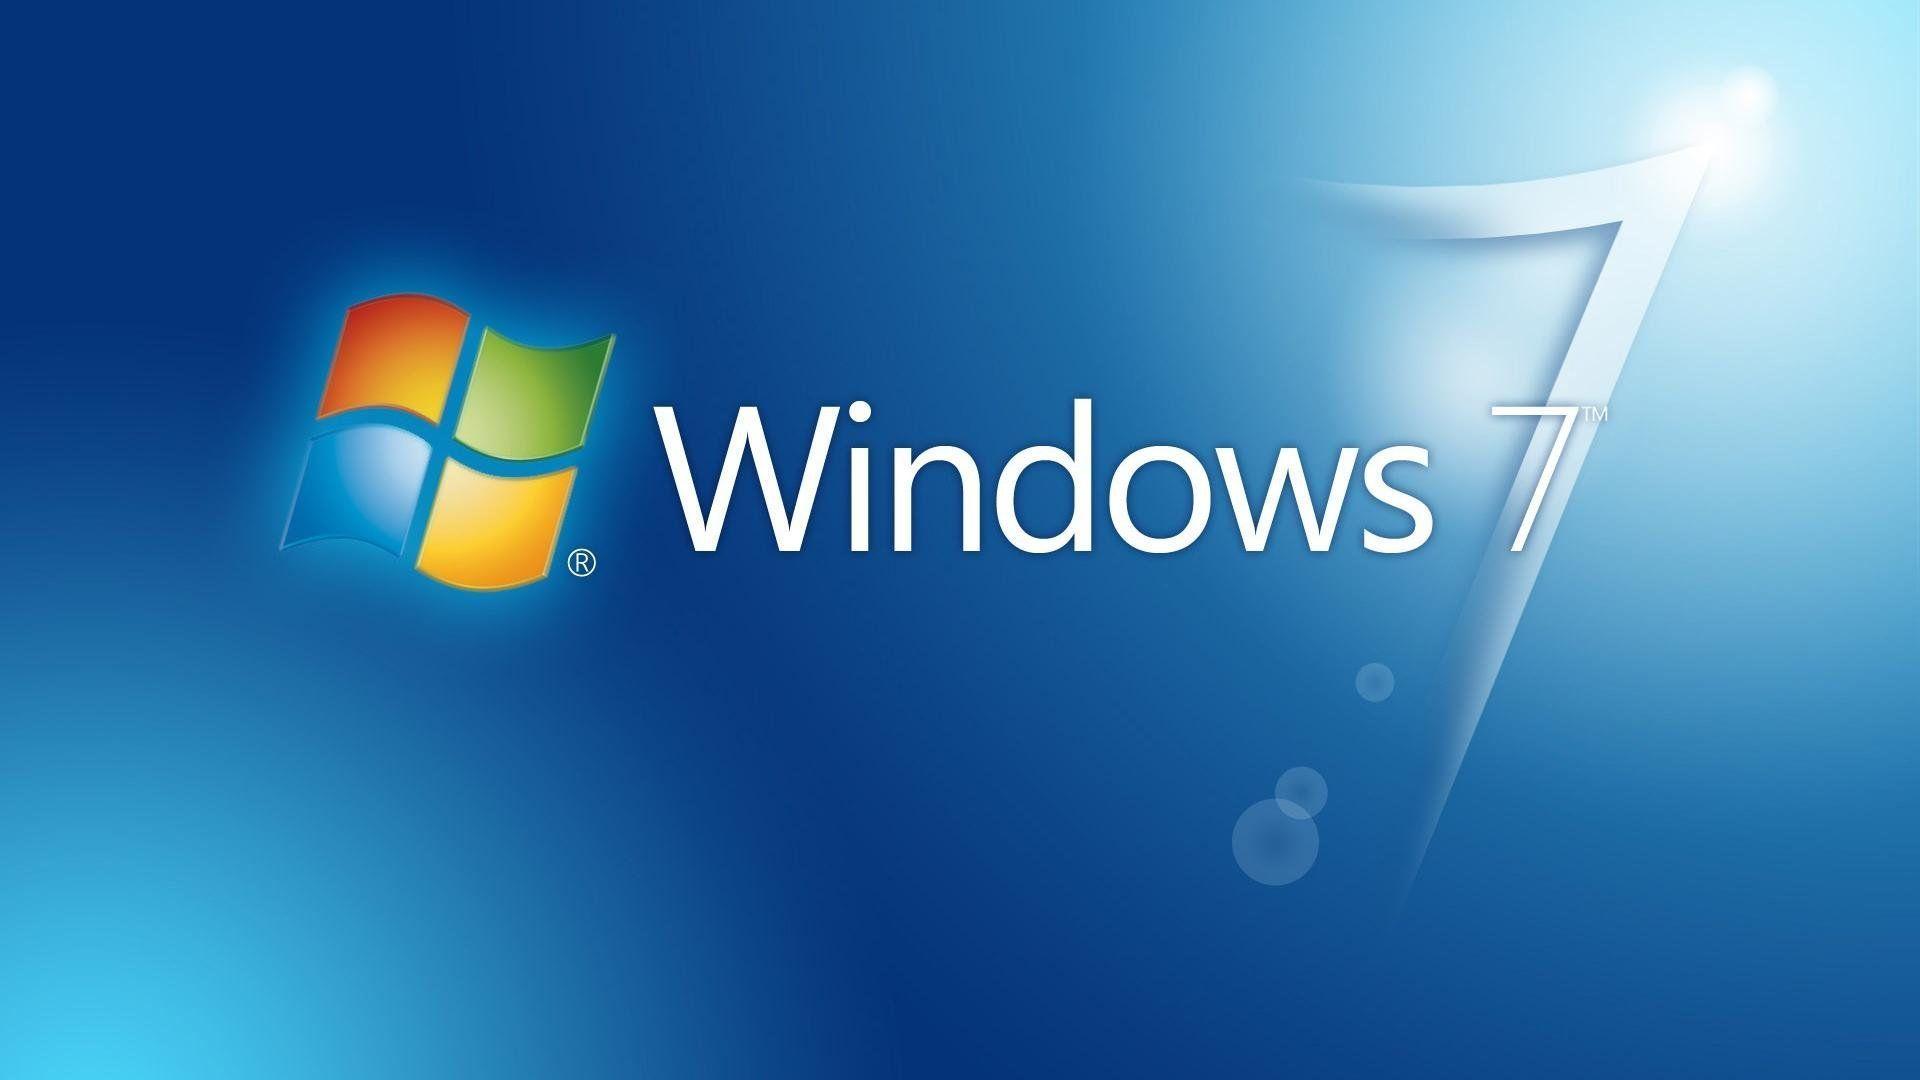 Windows 7 HD Wallpapers Download Free for PC Desktop